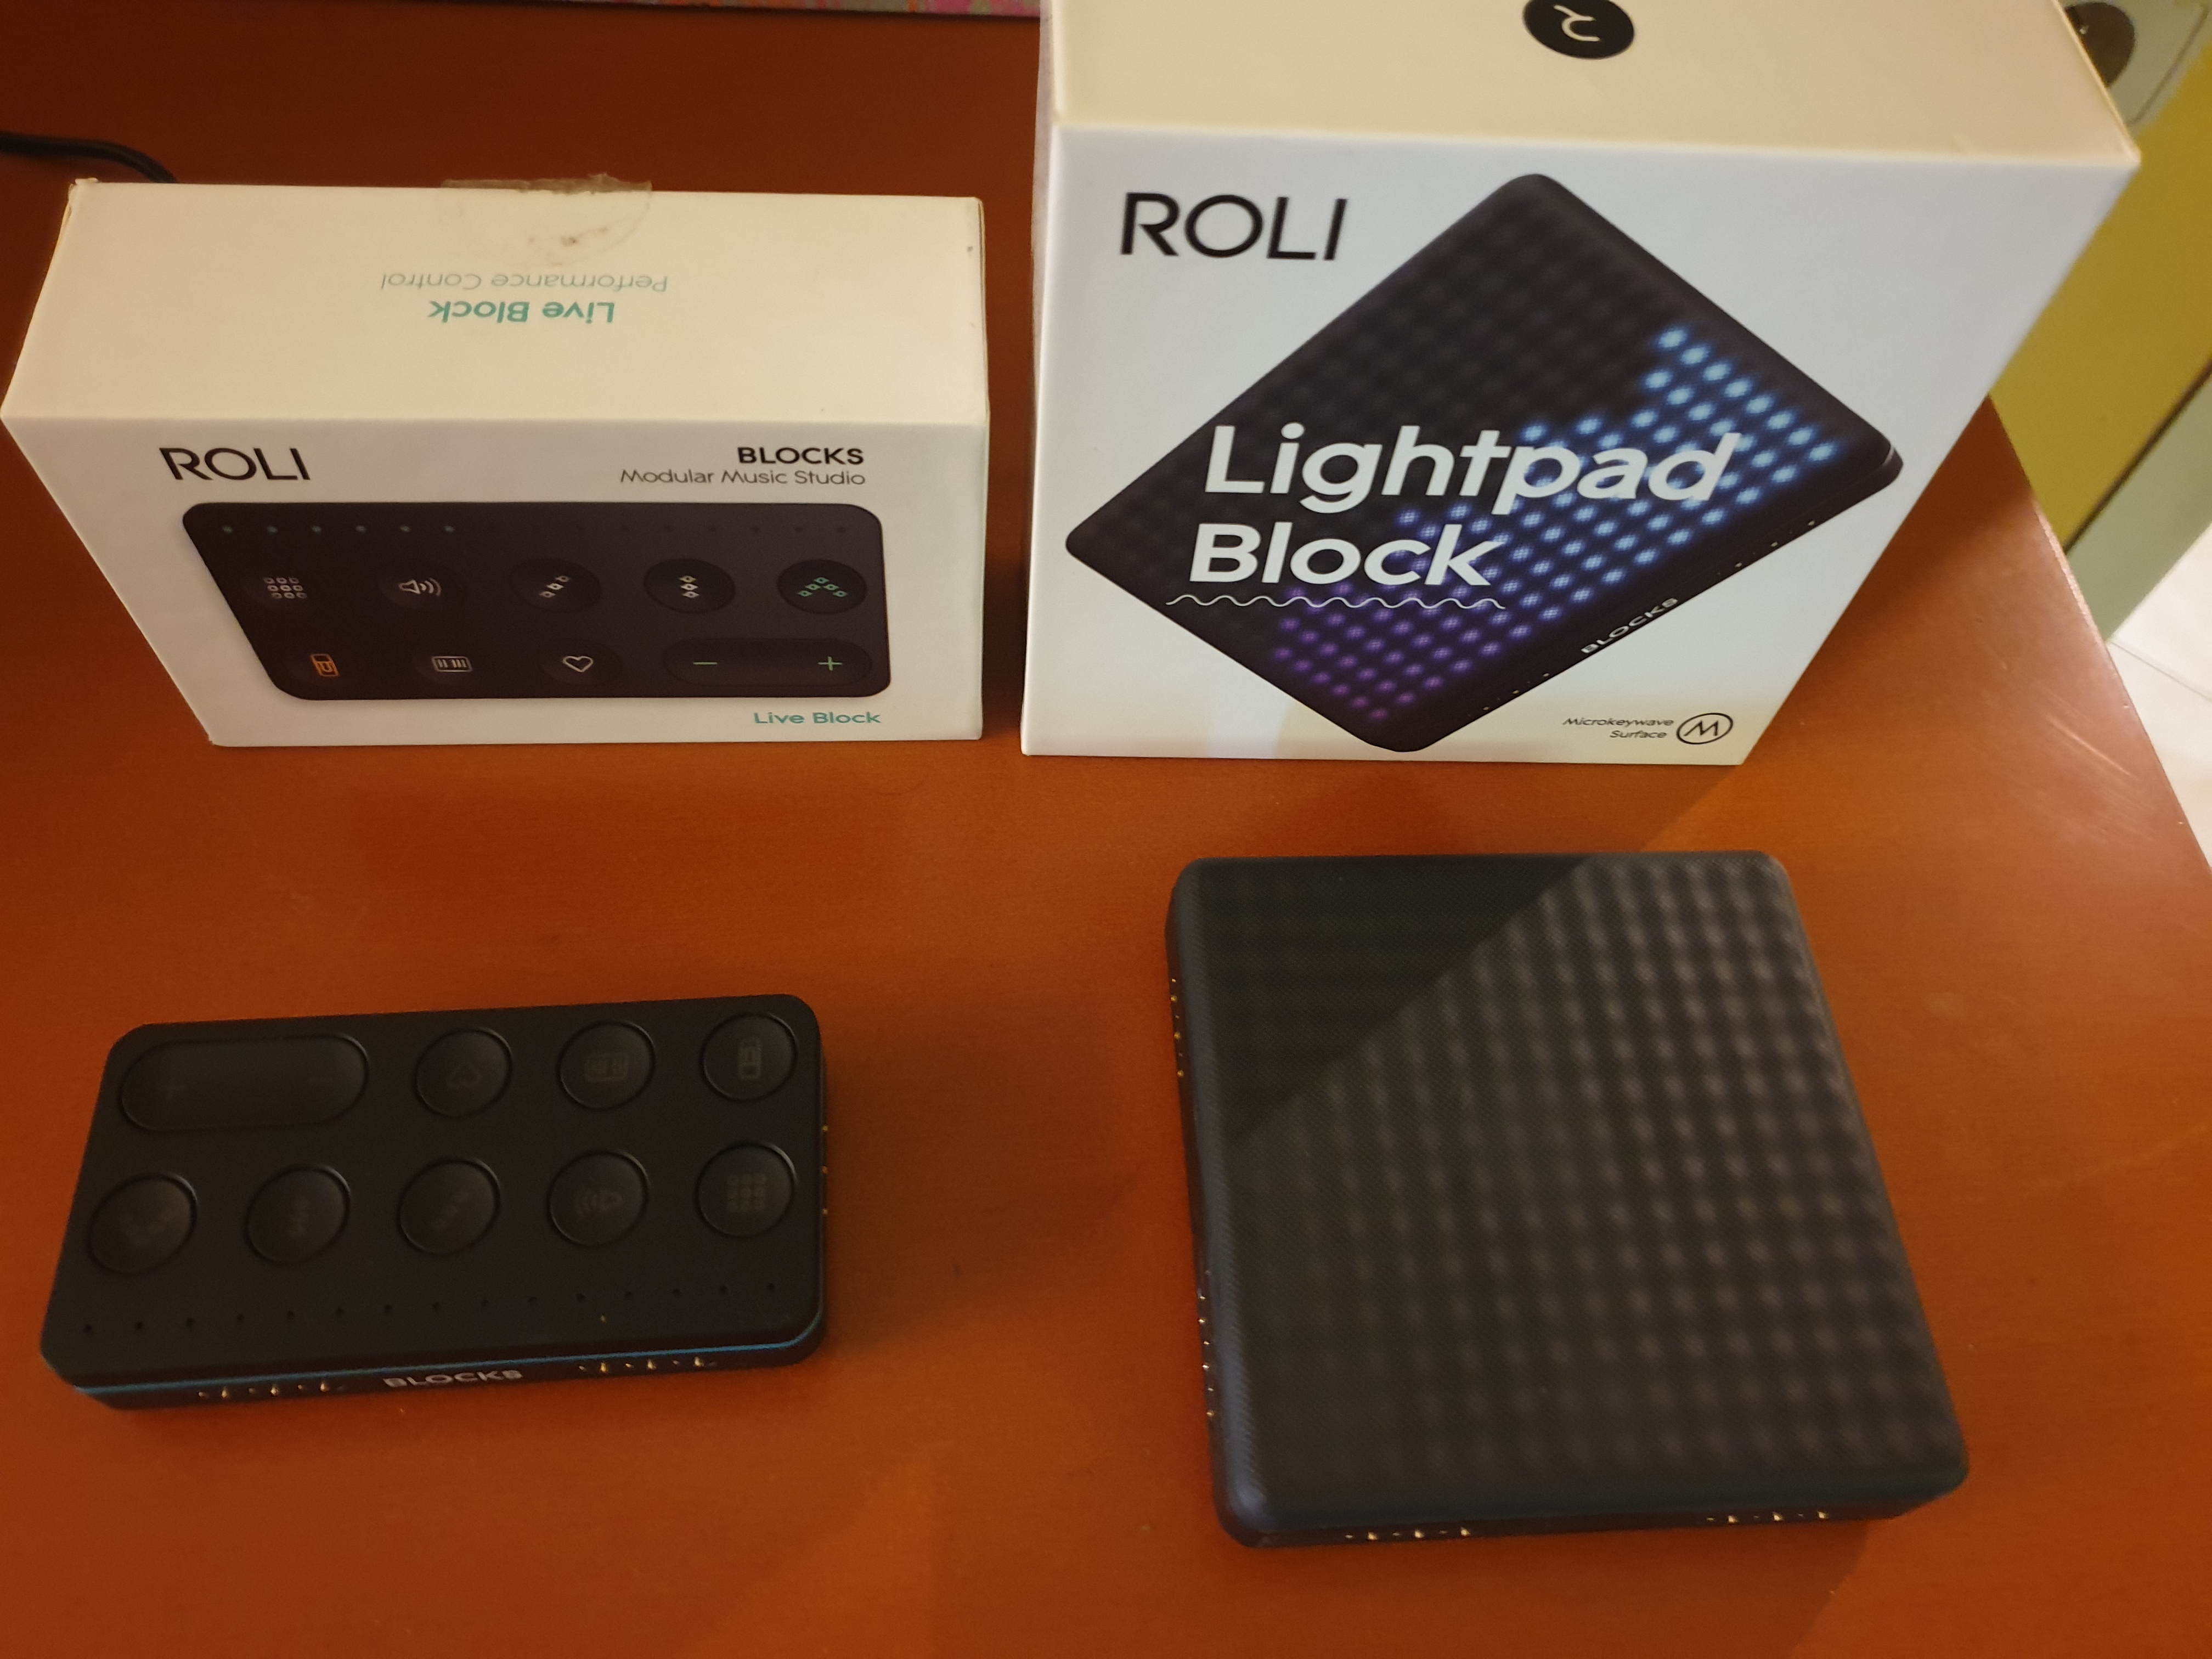 Article: Hardware Overview: The ROLI Lightpad Block M